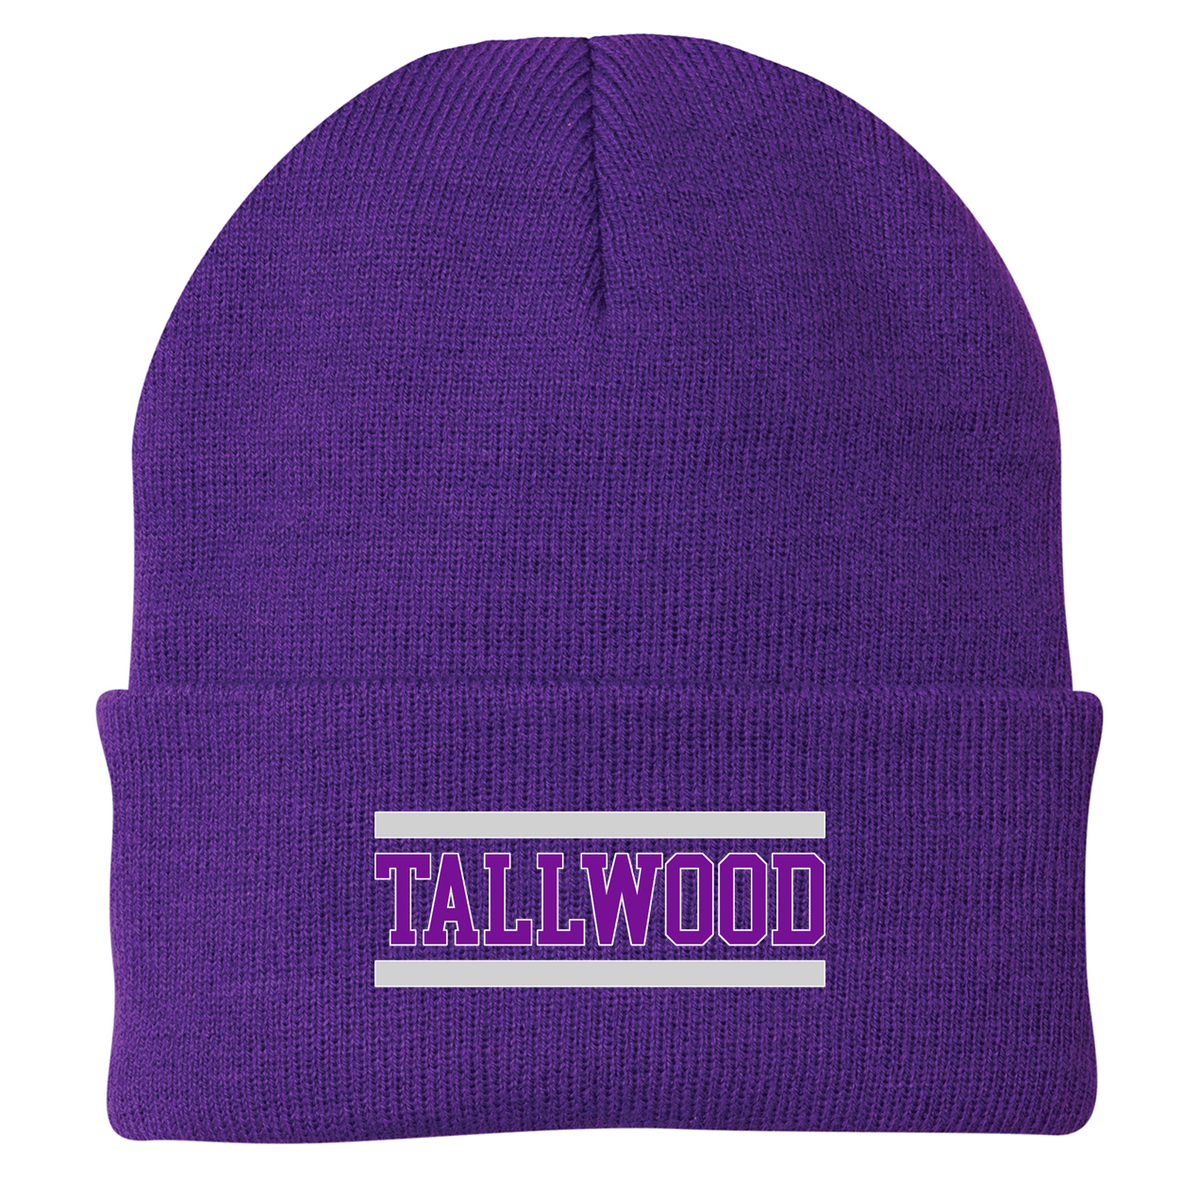 Tallwood Wrestling Knit Beanie